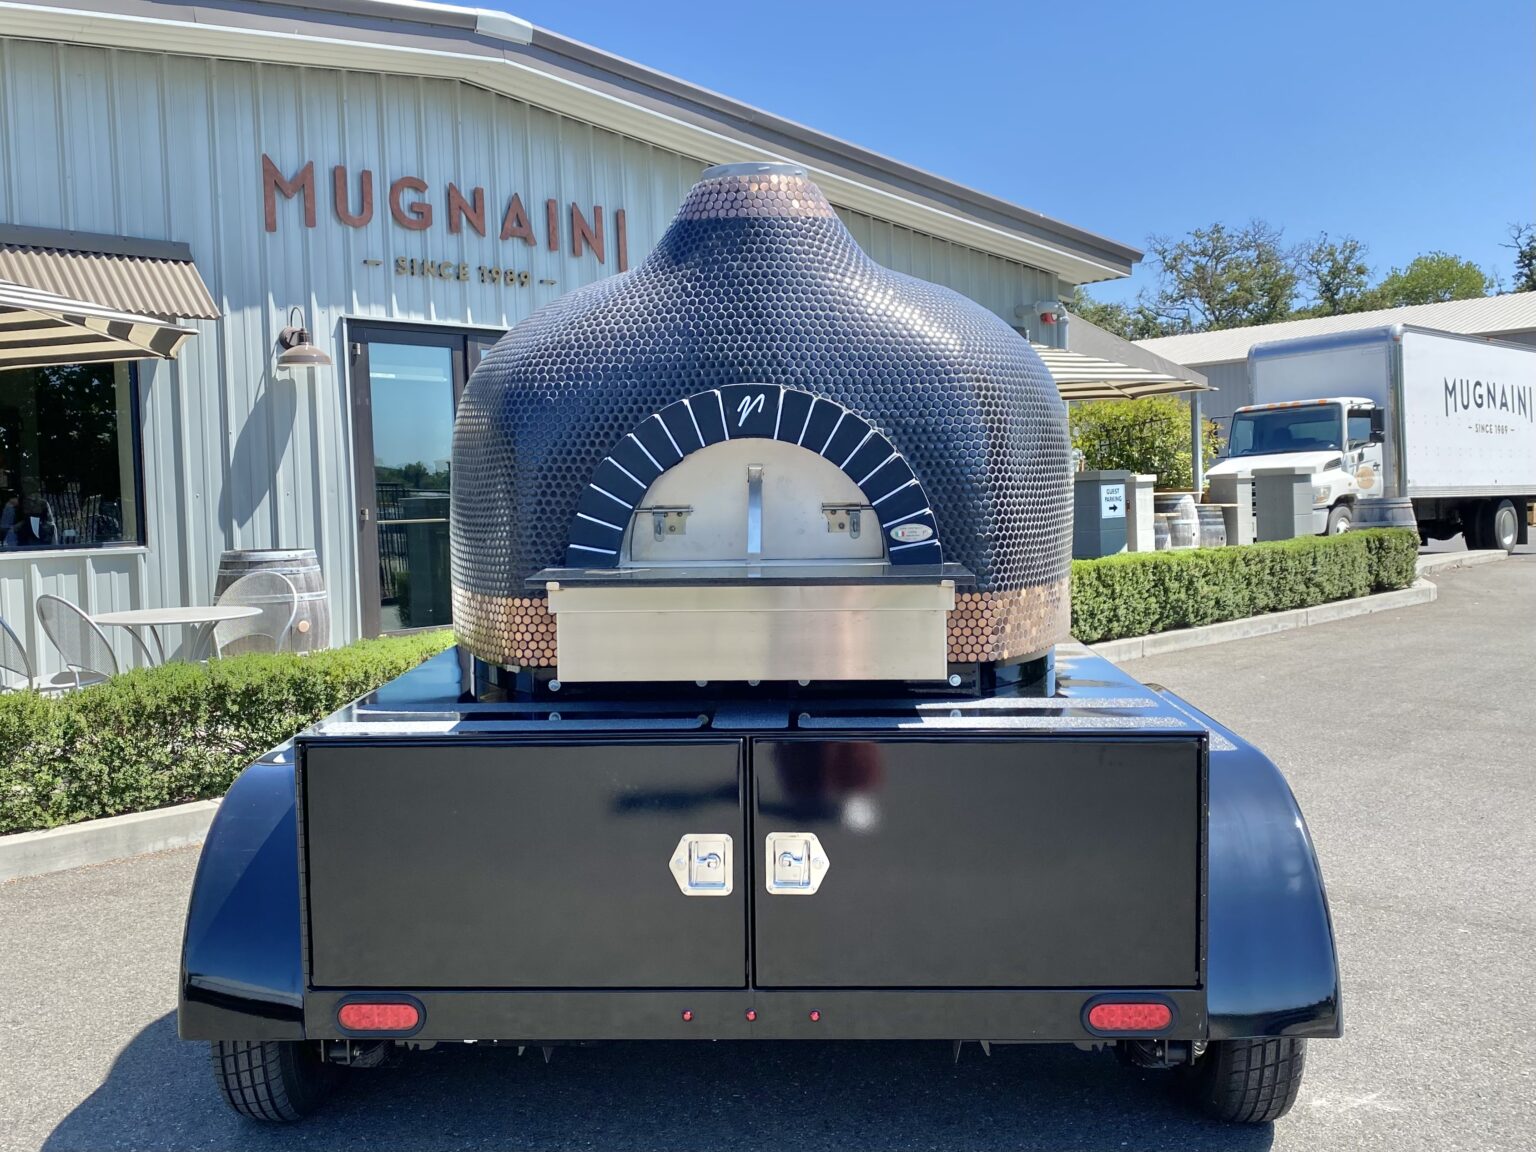 Mobile Pizza Ovens, a Mobile Pizza Oven at the Mugnaini Facility